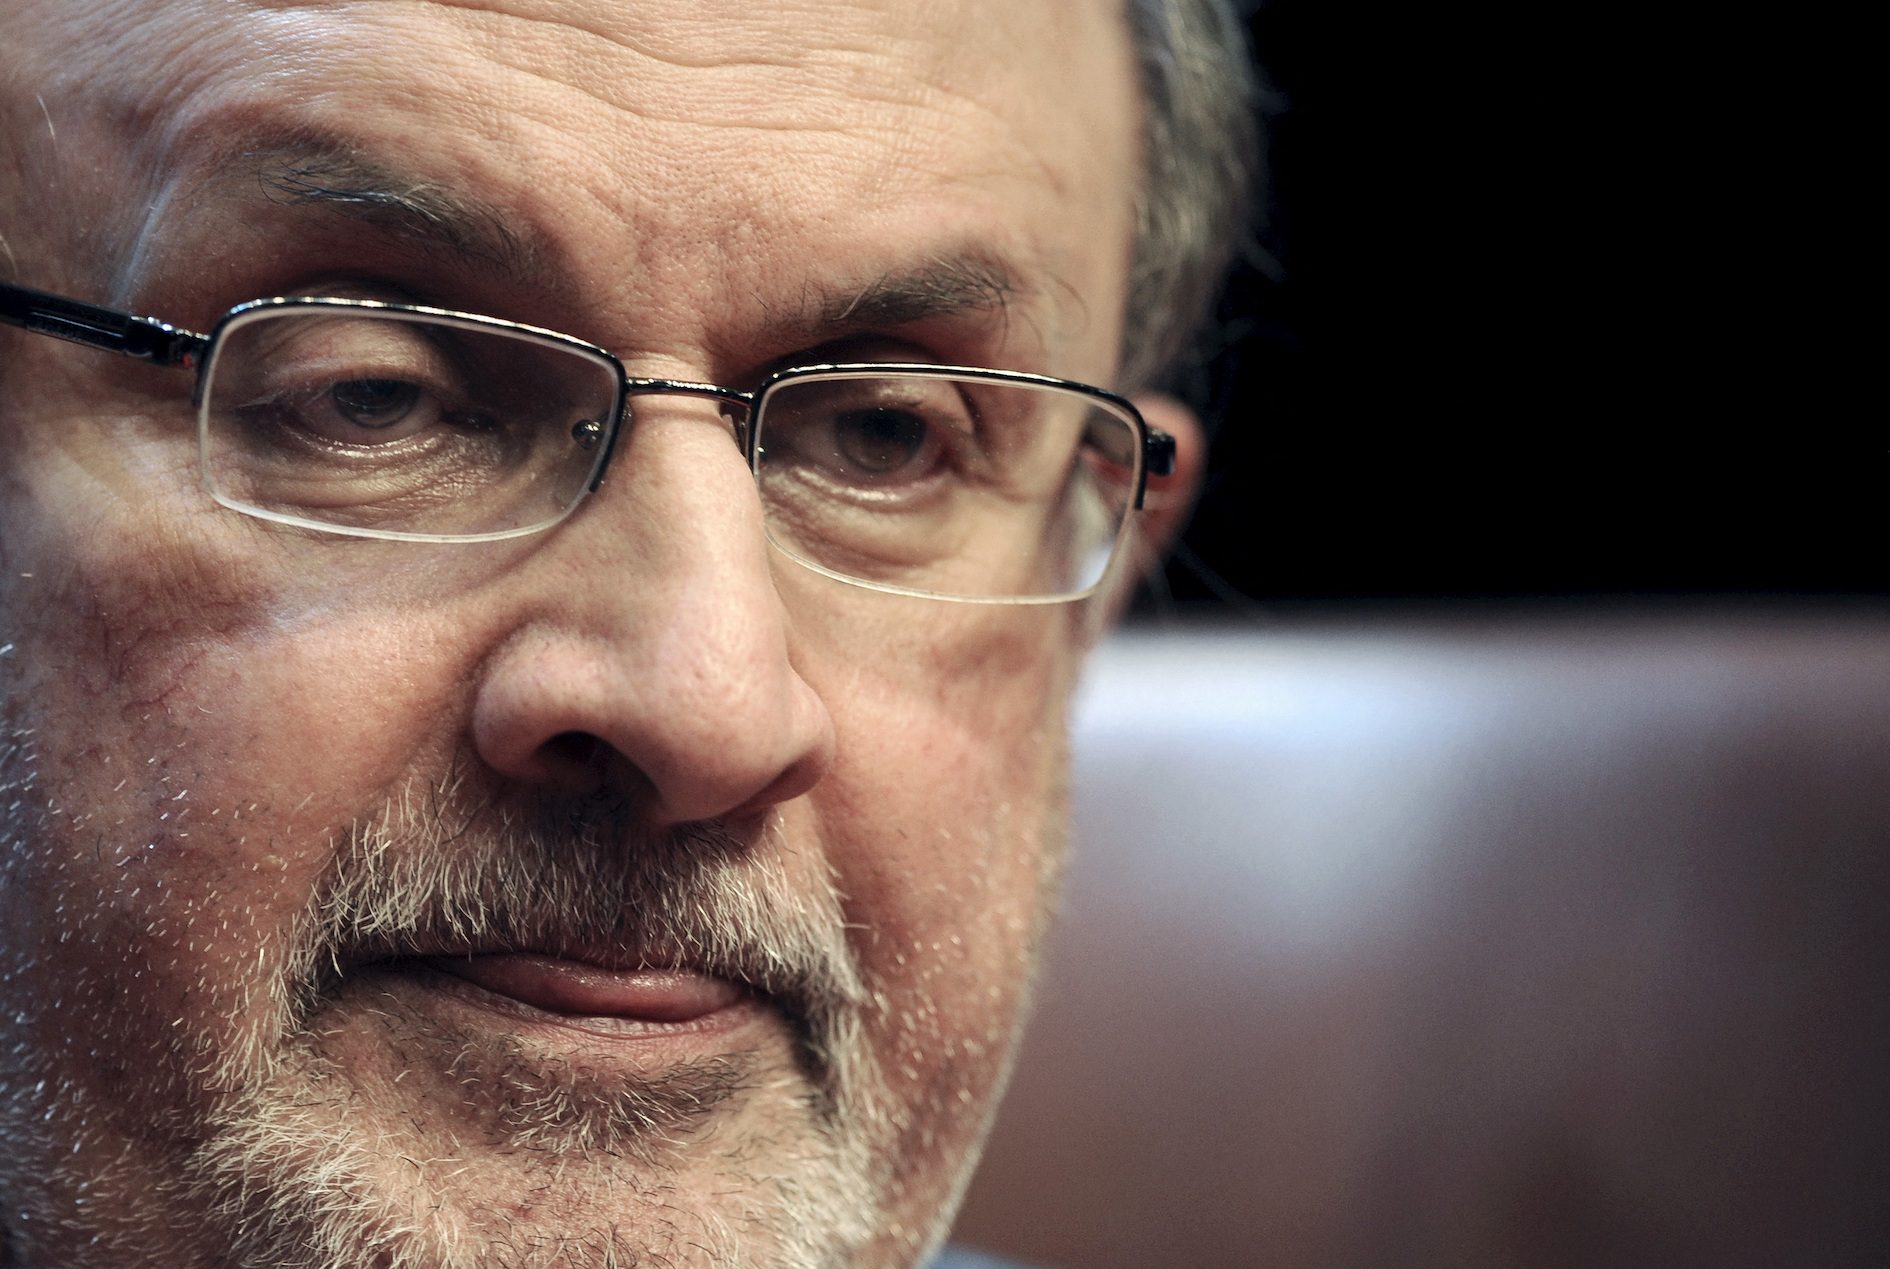 Salman Rushdie, novelist who drew death threats, on ventilator after New York stabbing